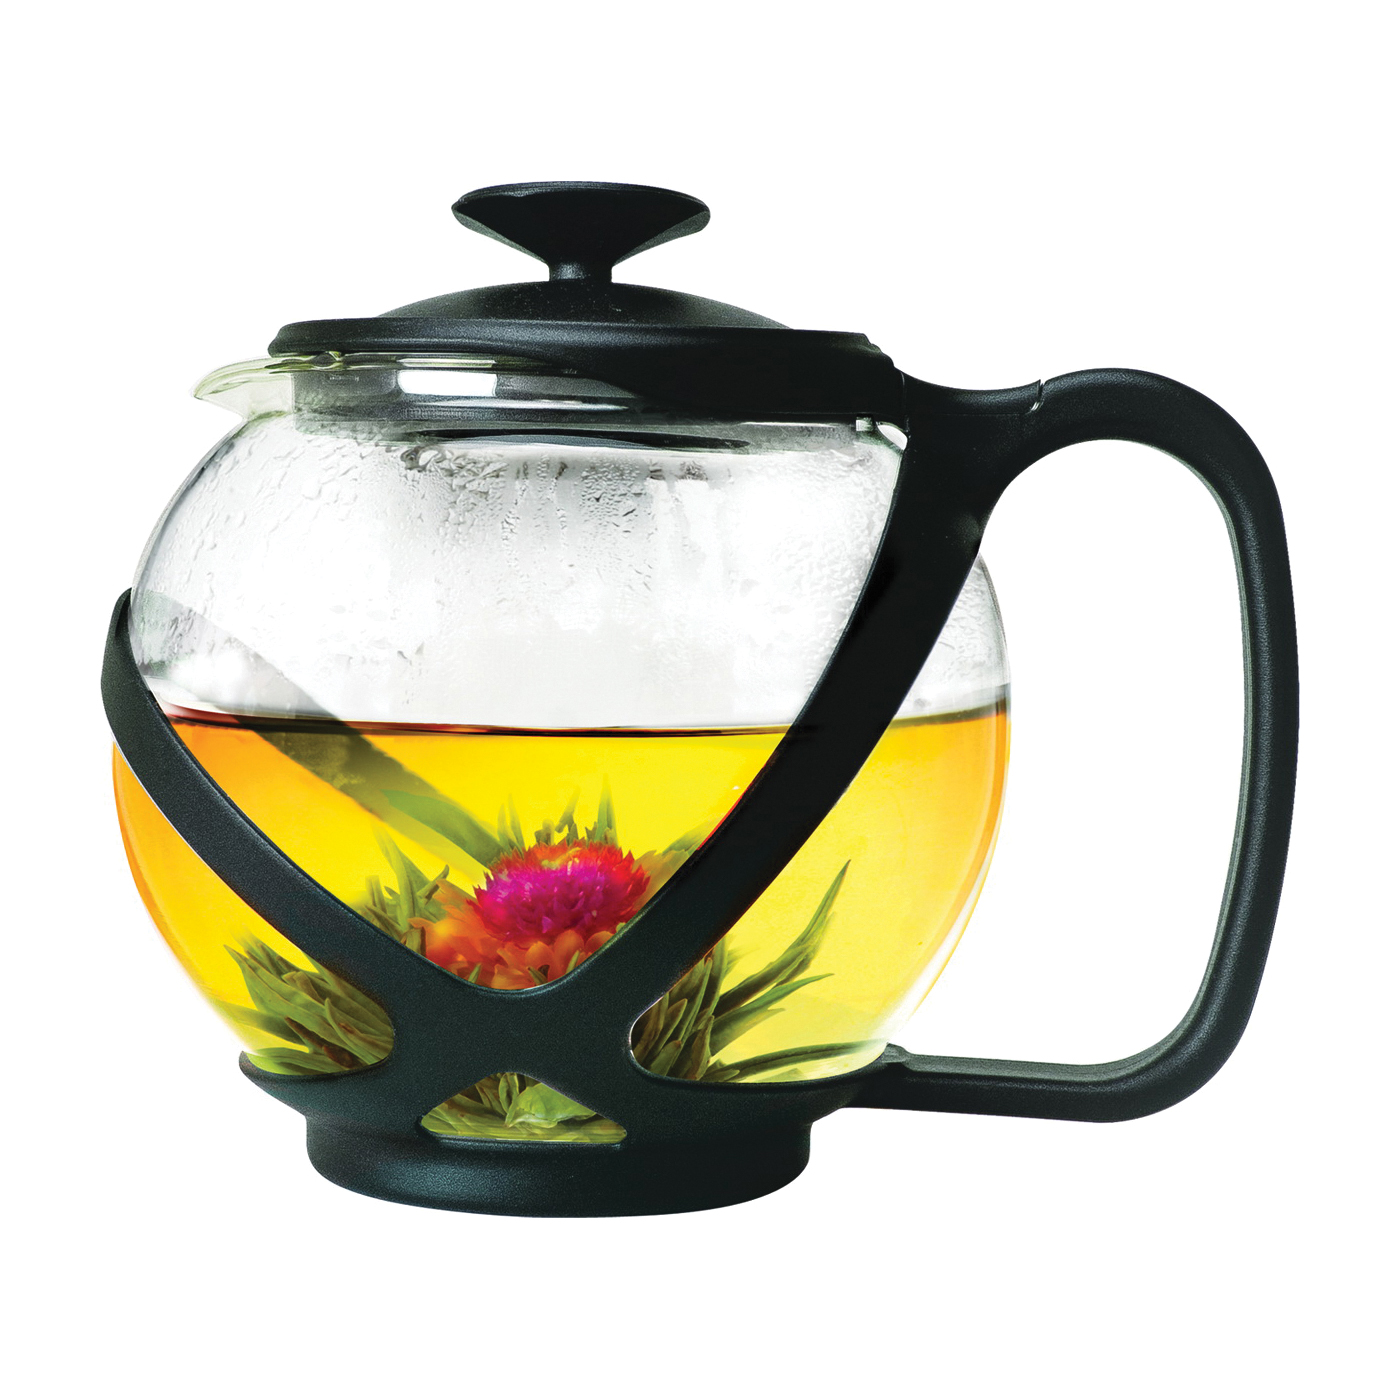 Tempo Series PTA-2340 Teapot, 40 oz Capacity, Borosilicate Glass, Black/Red